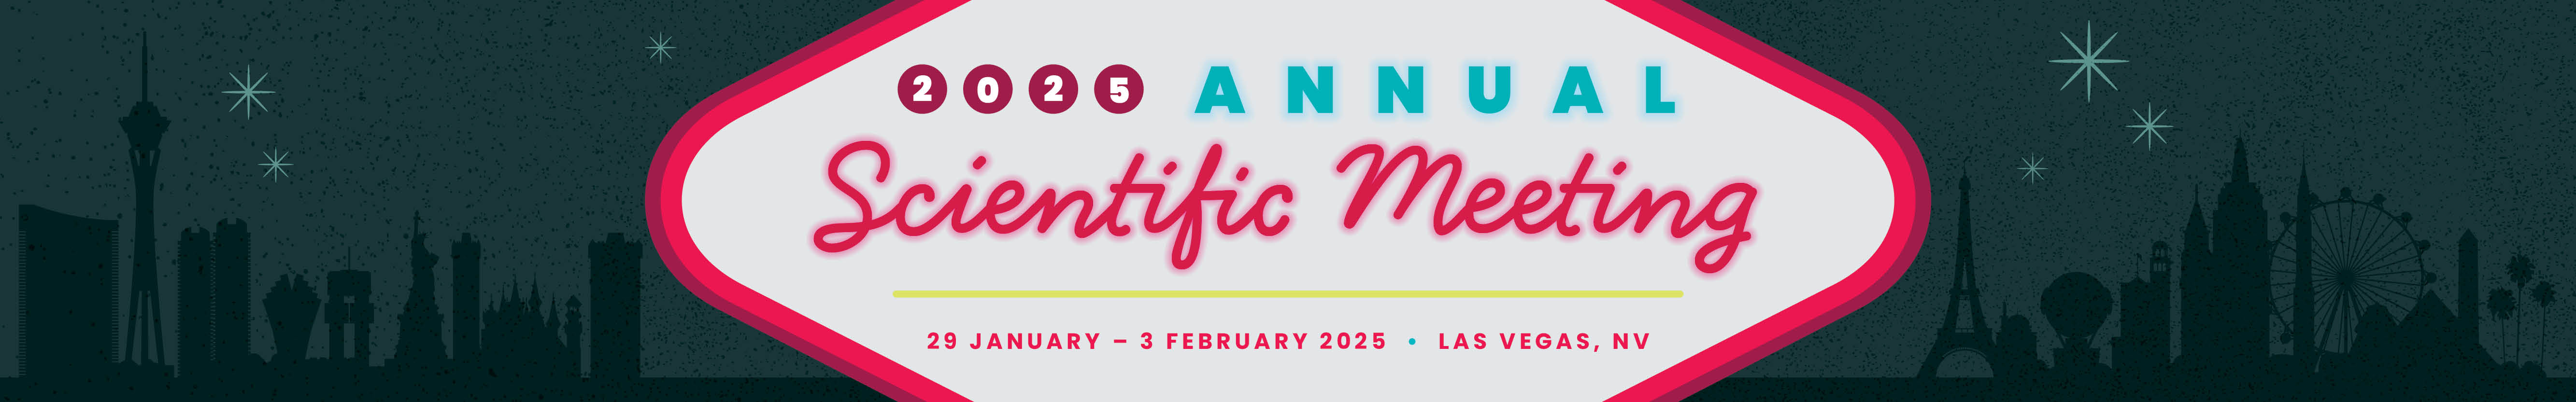 SIO 2025 Annual Scientific Meeting